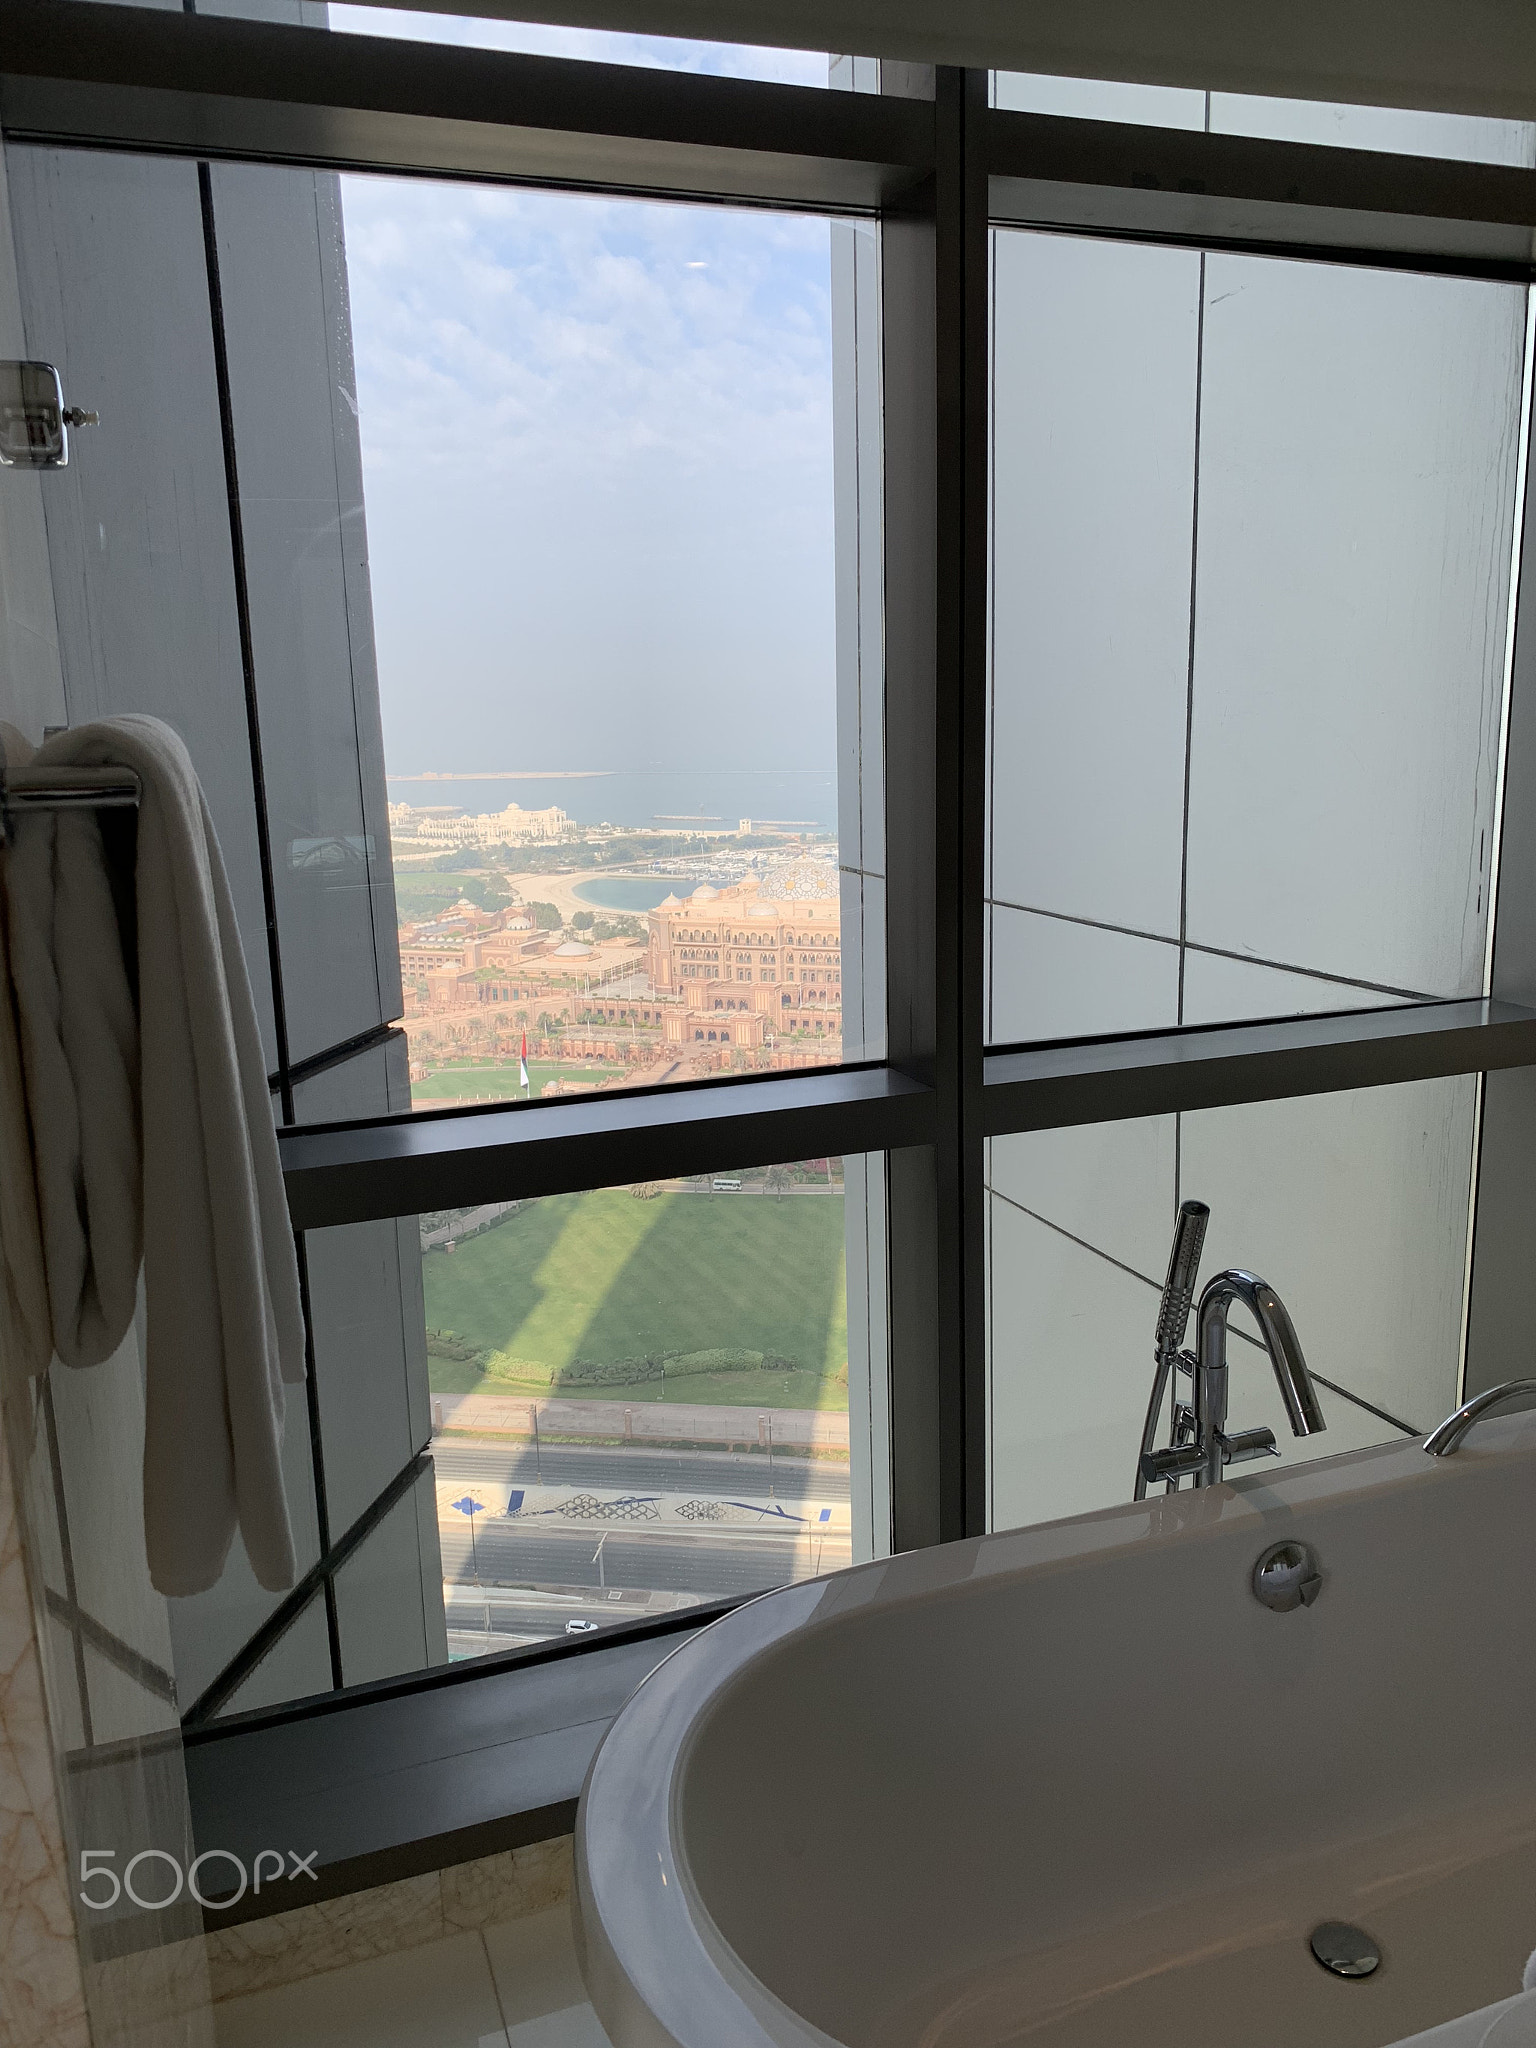 Bath tub with a view